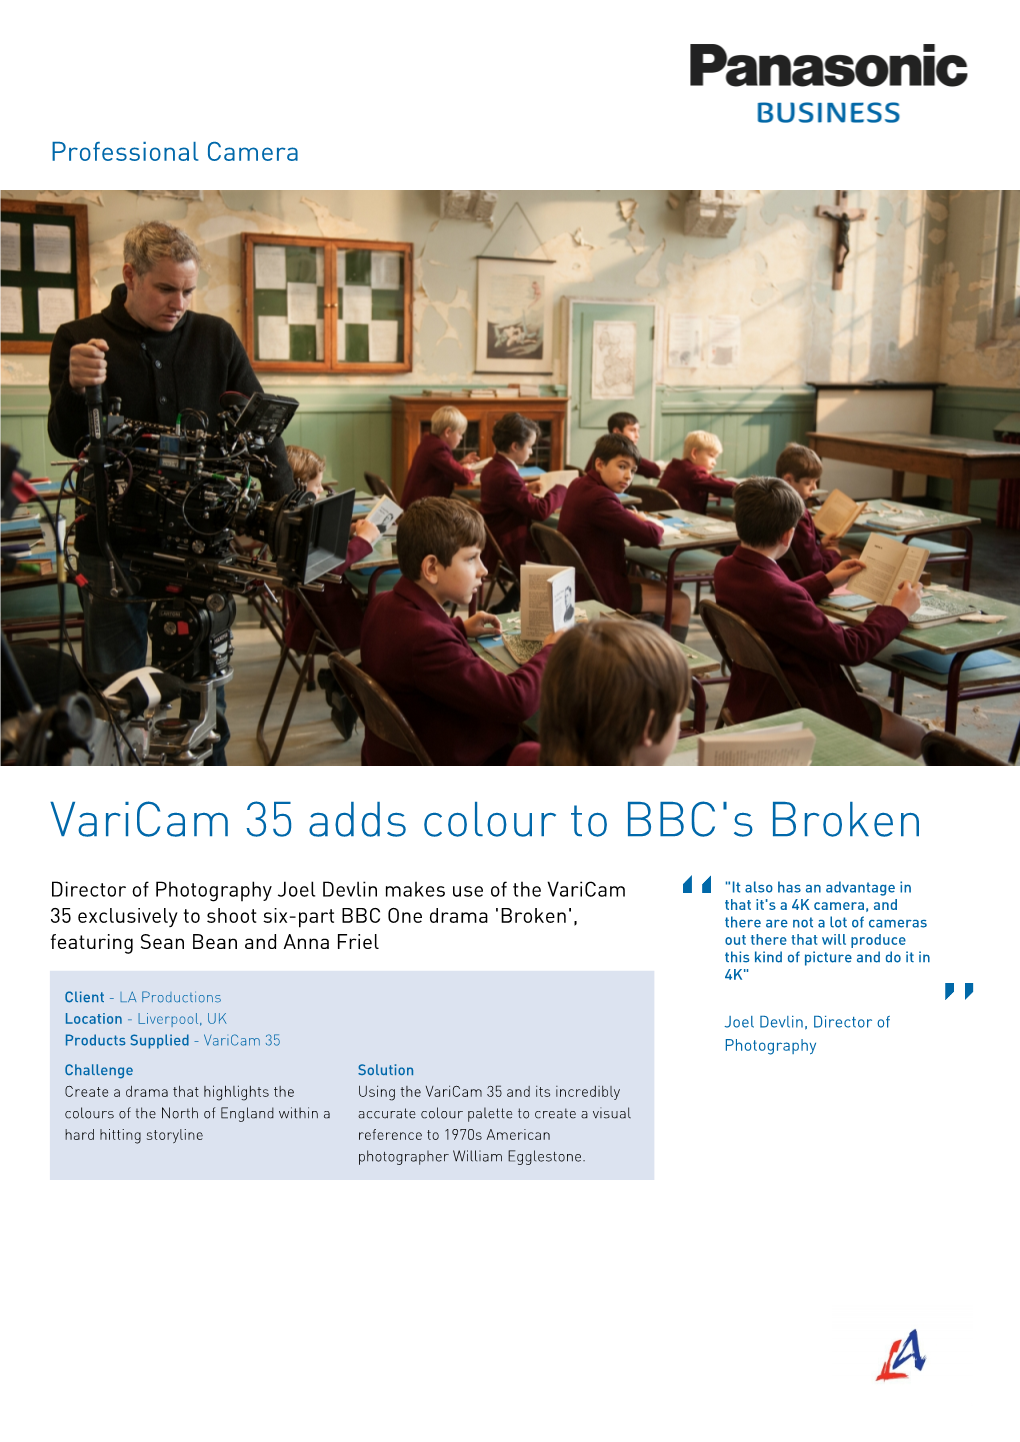 Varicam 35 Adds Colour to BBC's Broken